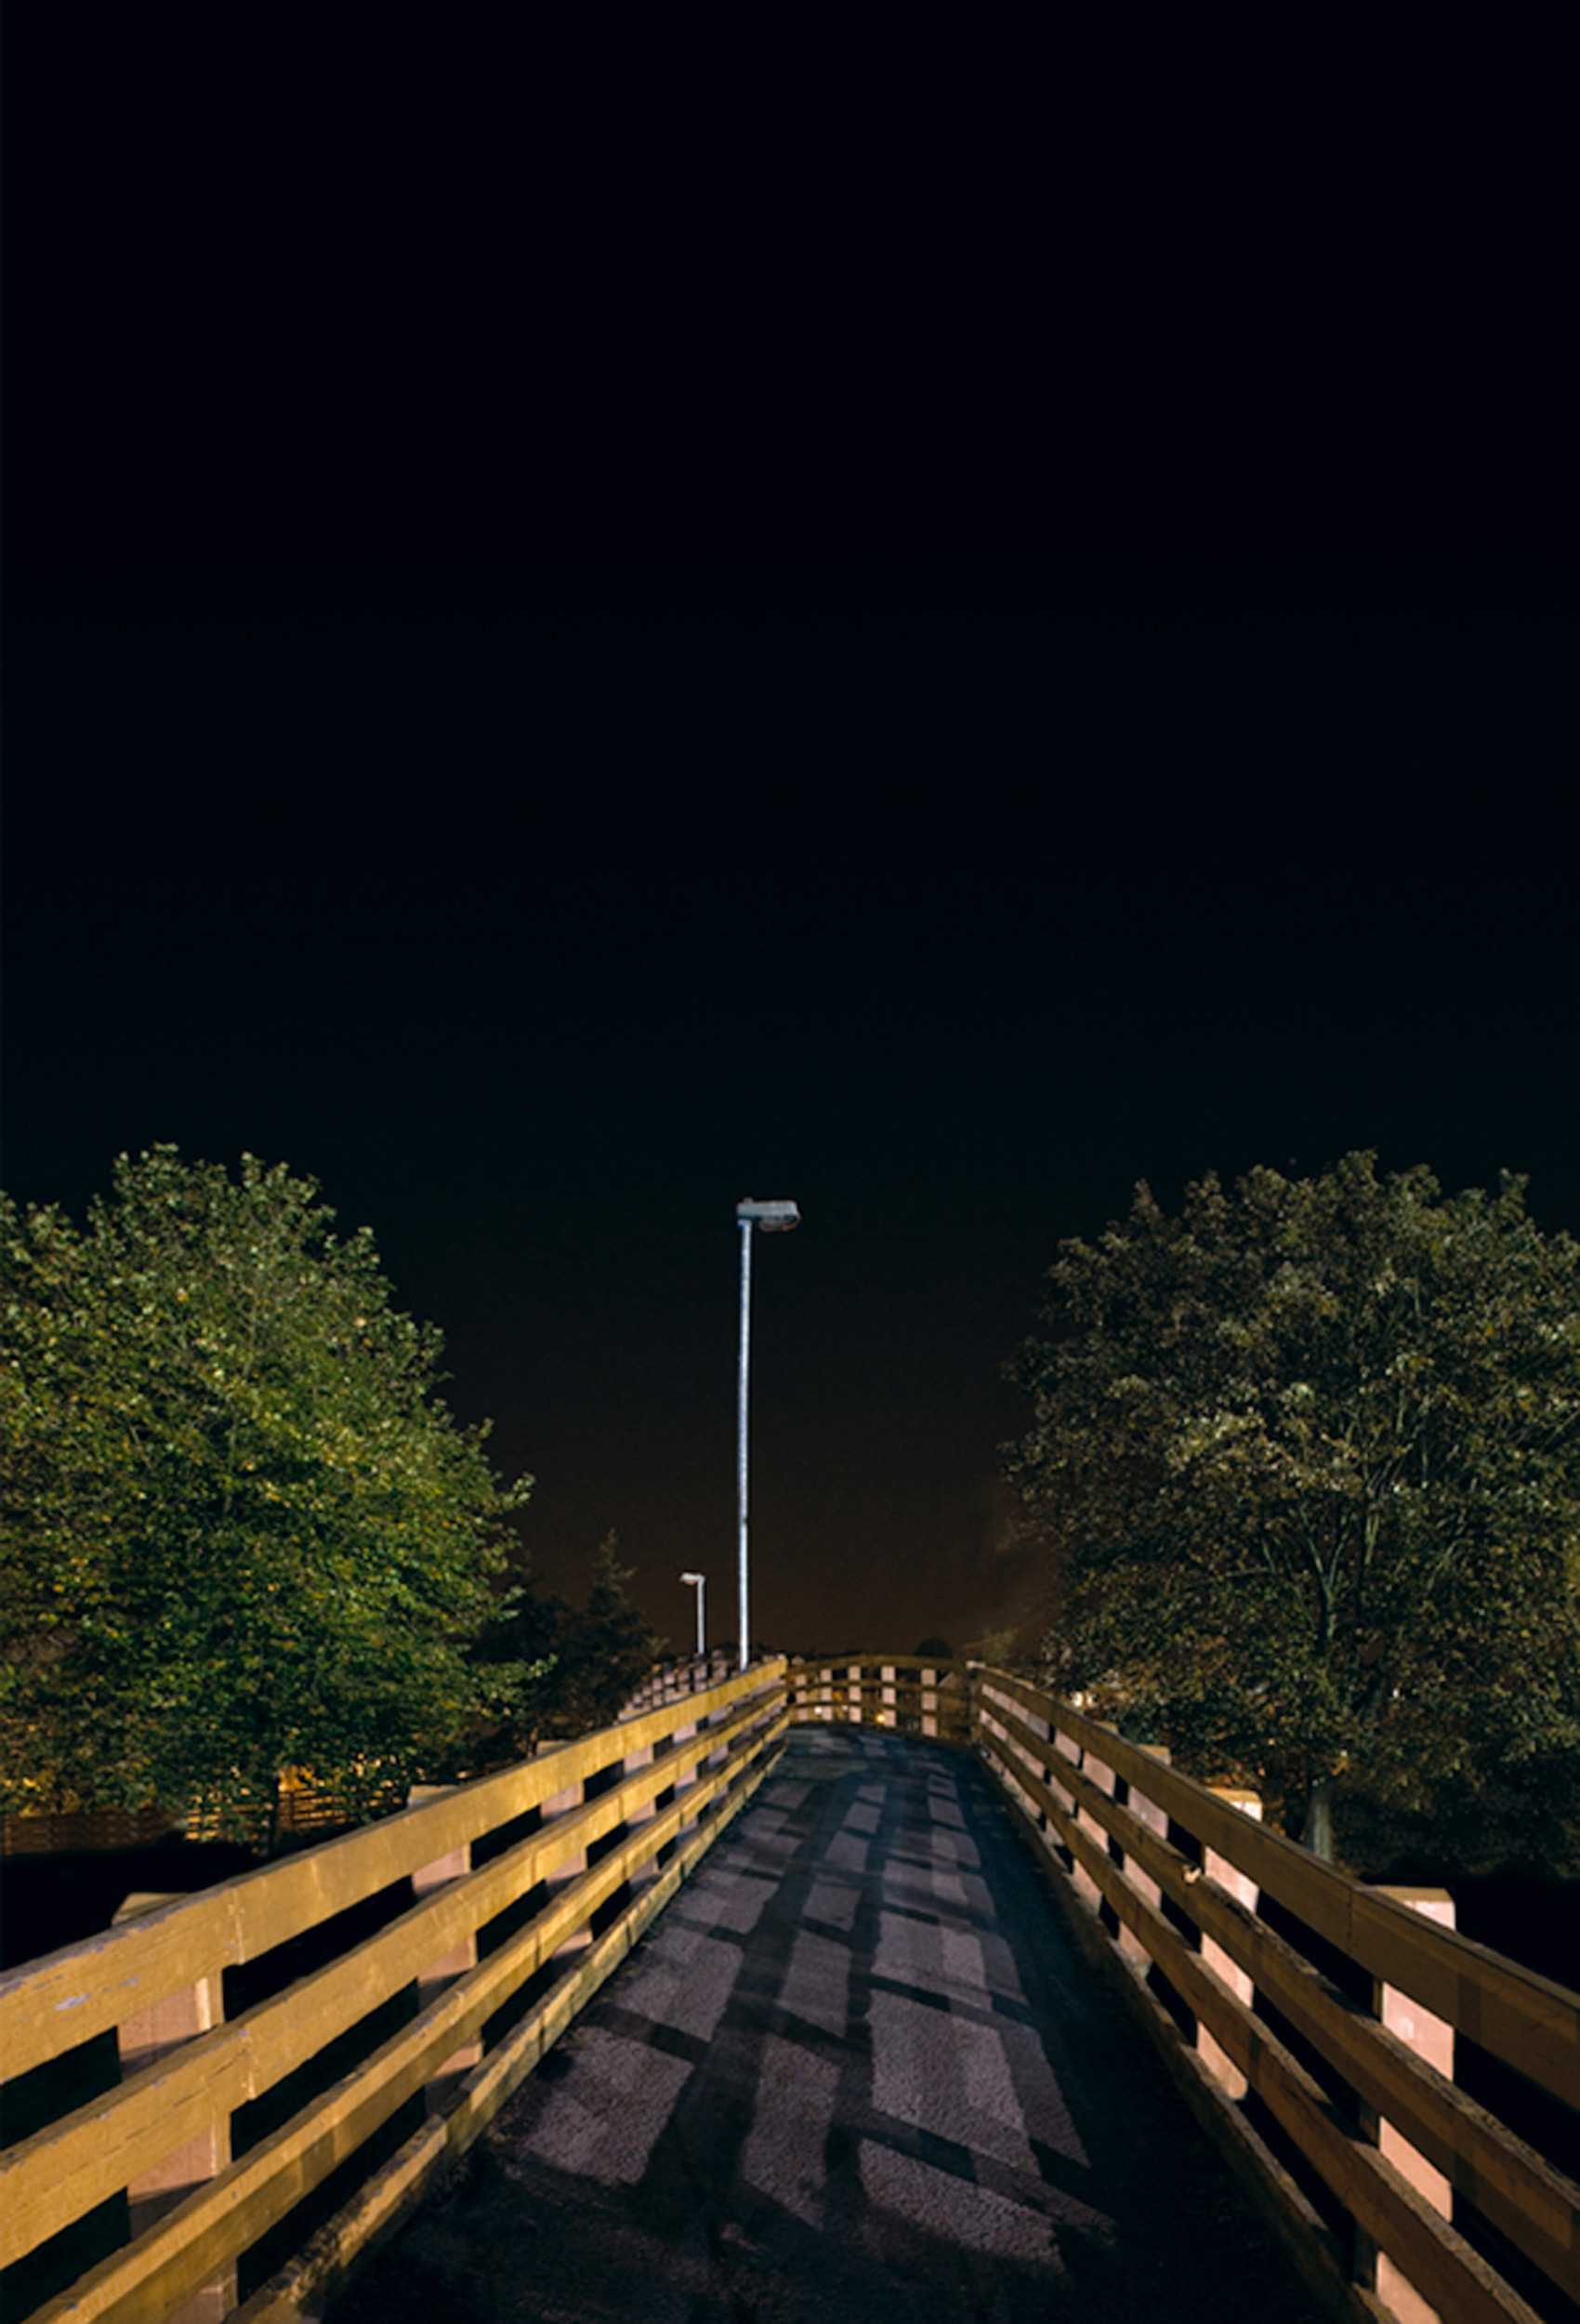 Wooden bridge at night